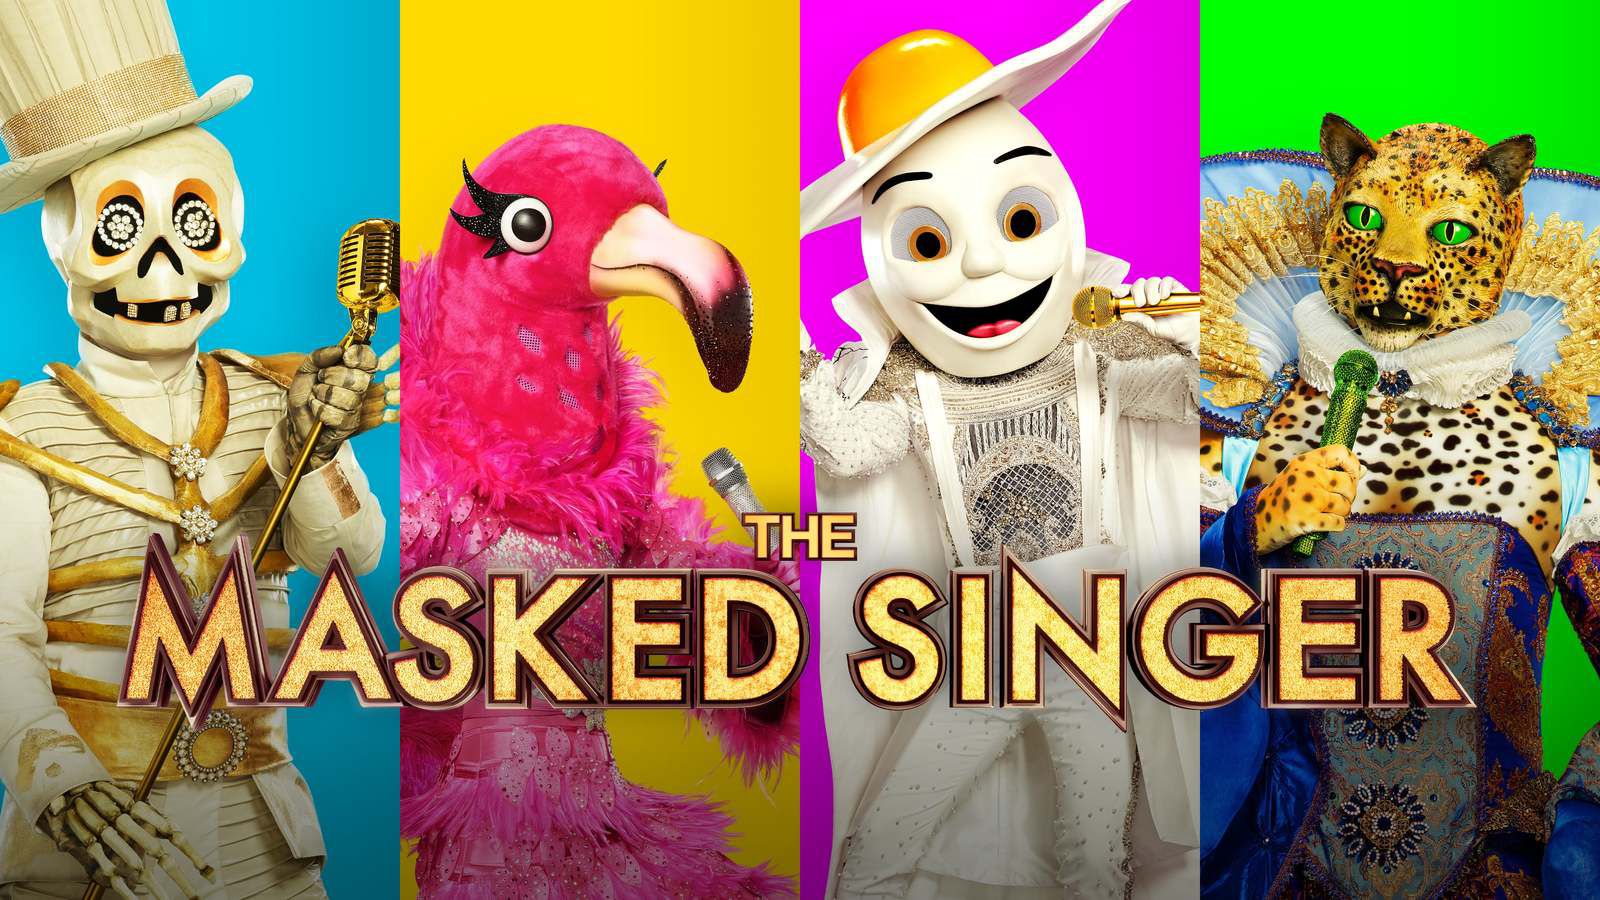 download The Masked Singer Season 3 Episode 15 english subtitle series The Masked Singer Season 3 Episode 15 full online free